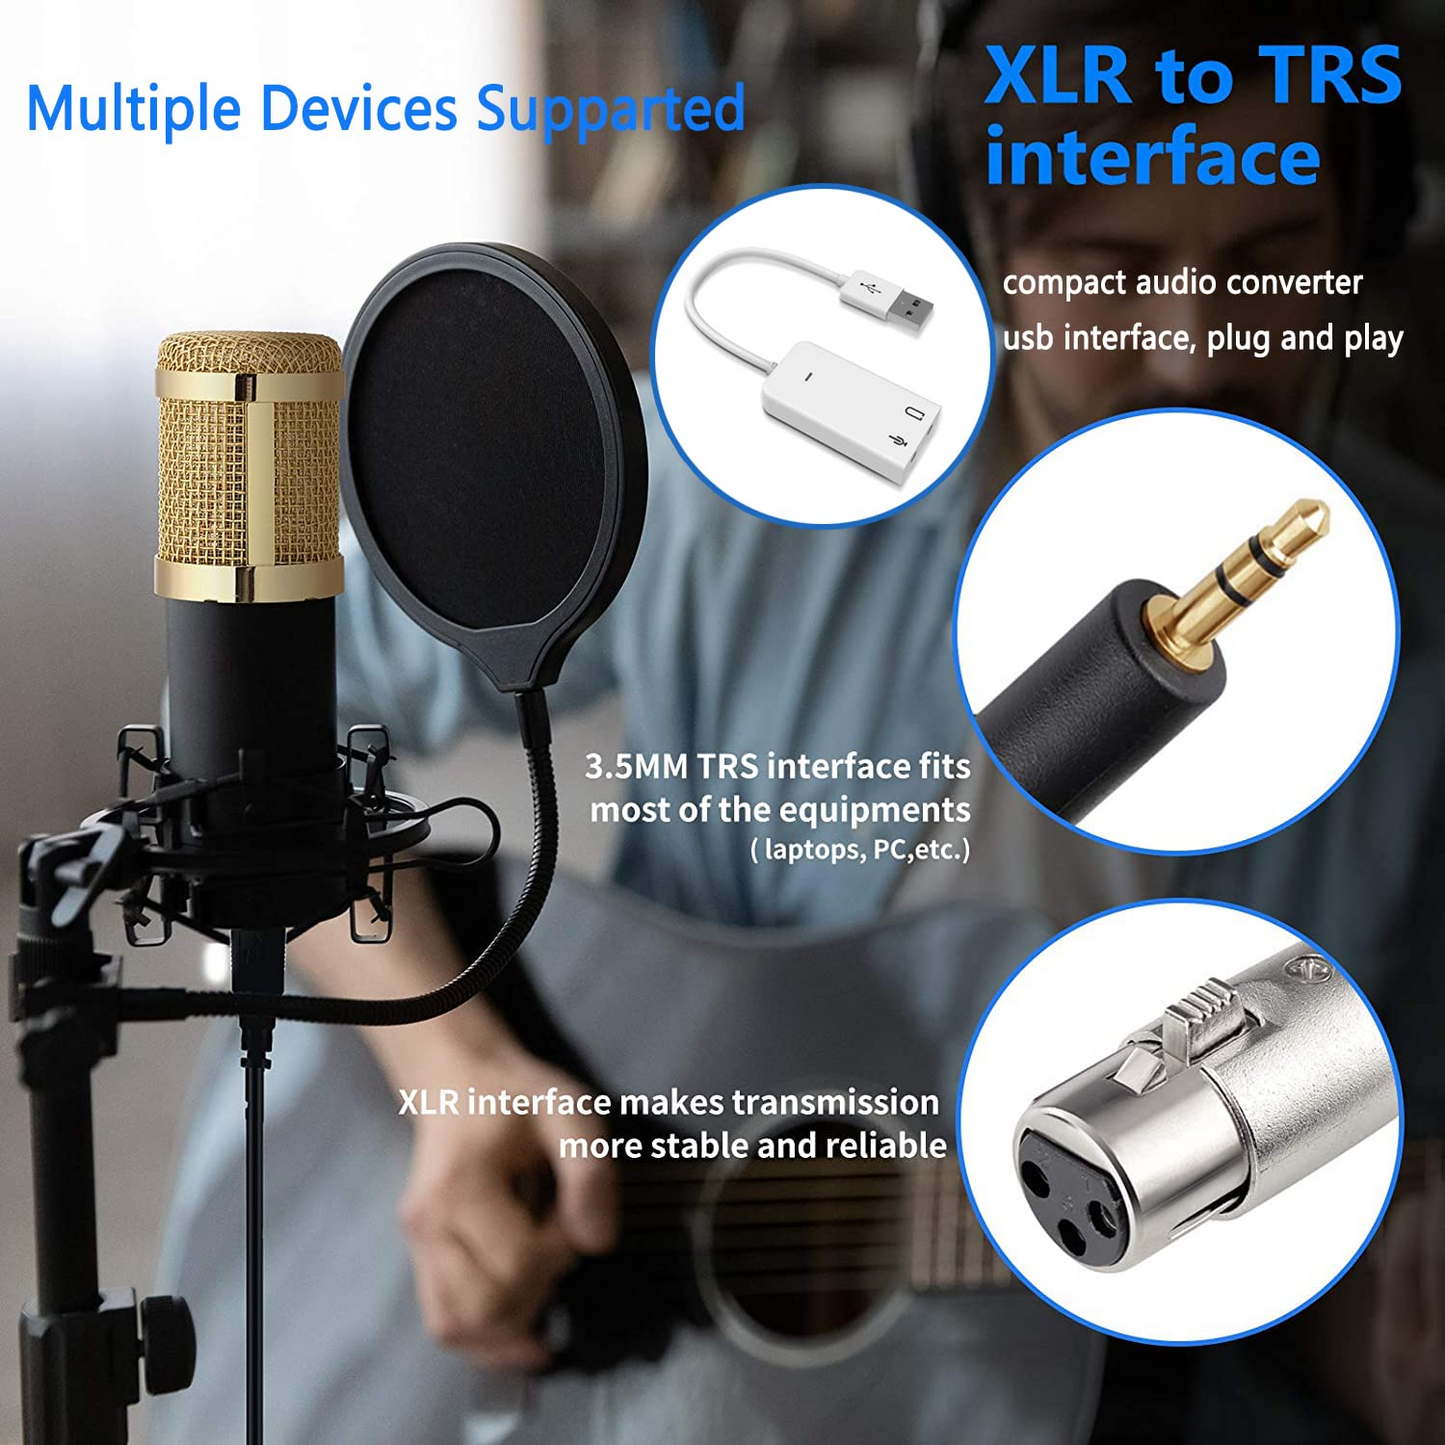 Kit de Microphone professionnel Cardioïde de Studio - X10 Maroc - Livraison gratuite -